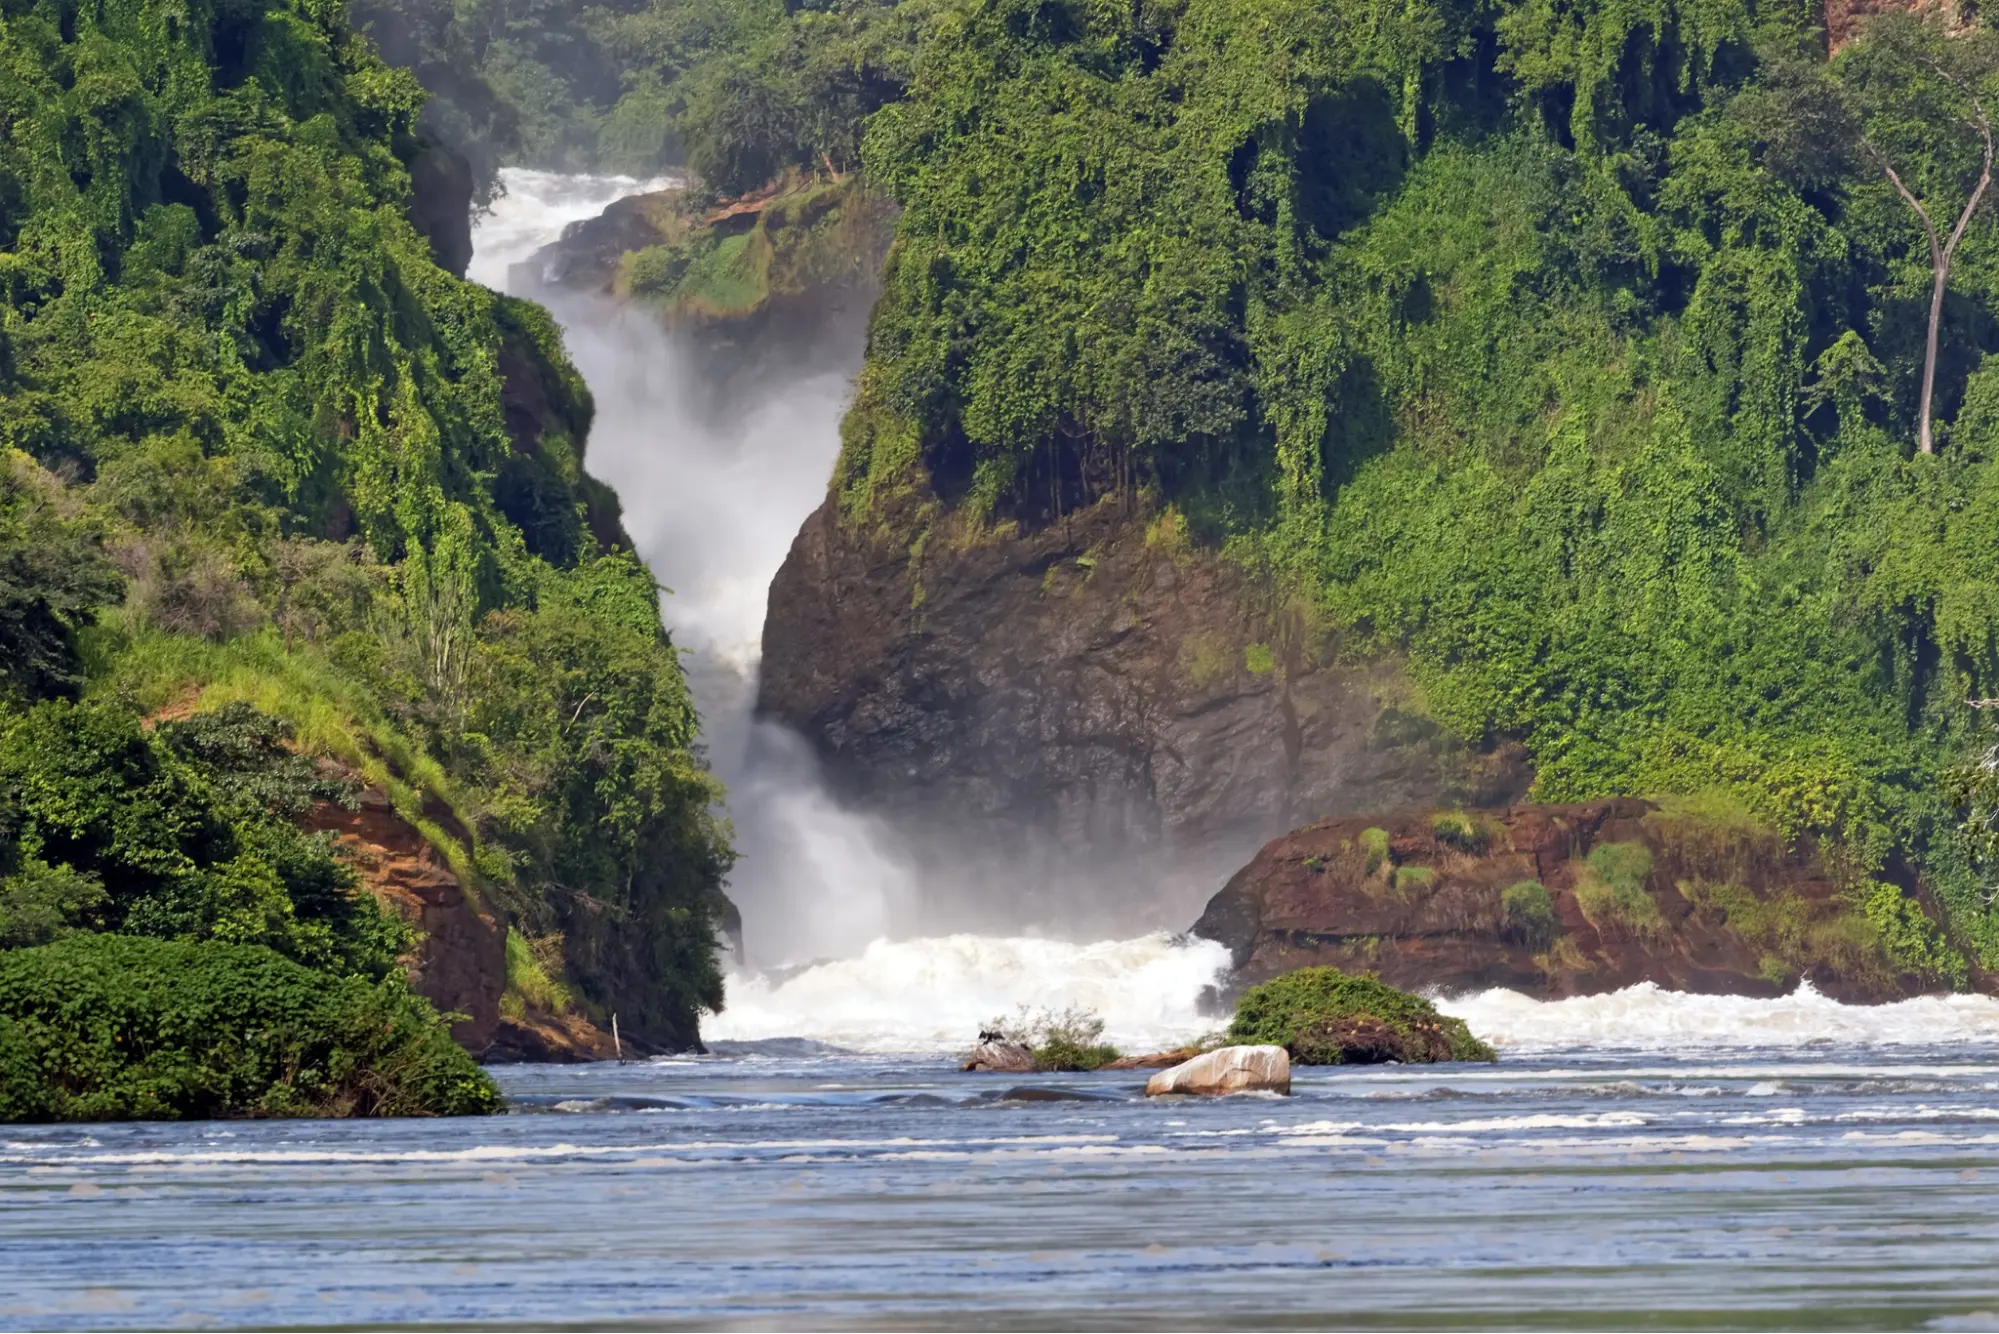 Where to spend Uganda holidays 2023 - The Murchison Falls